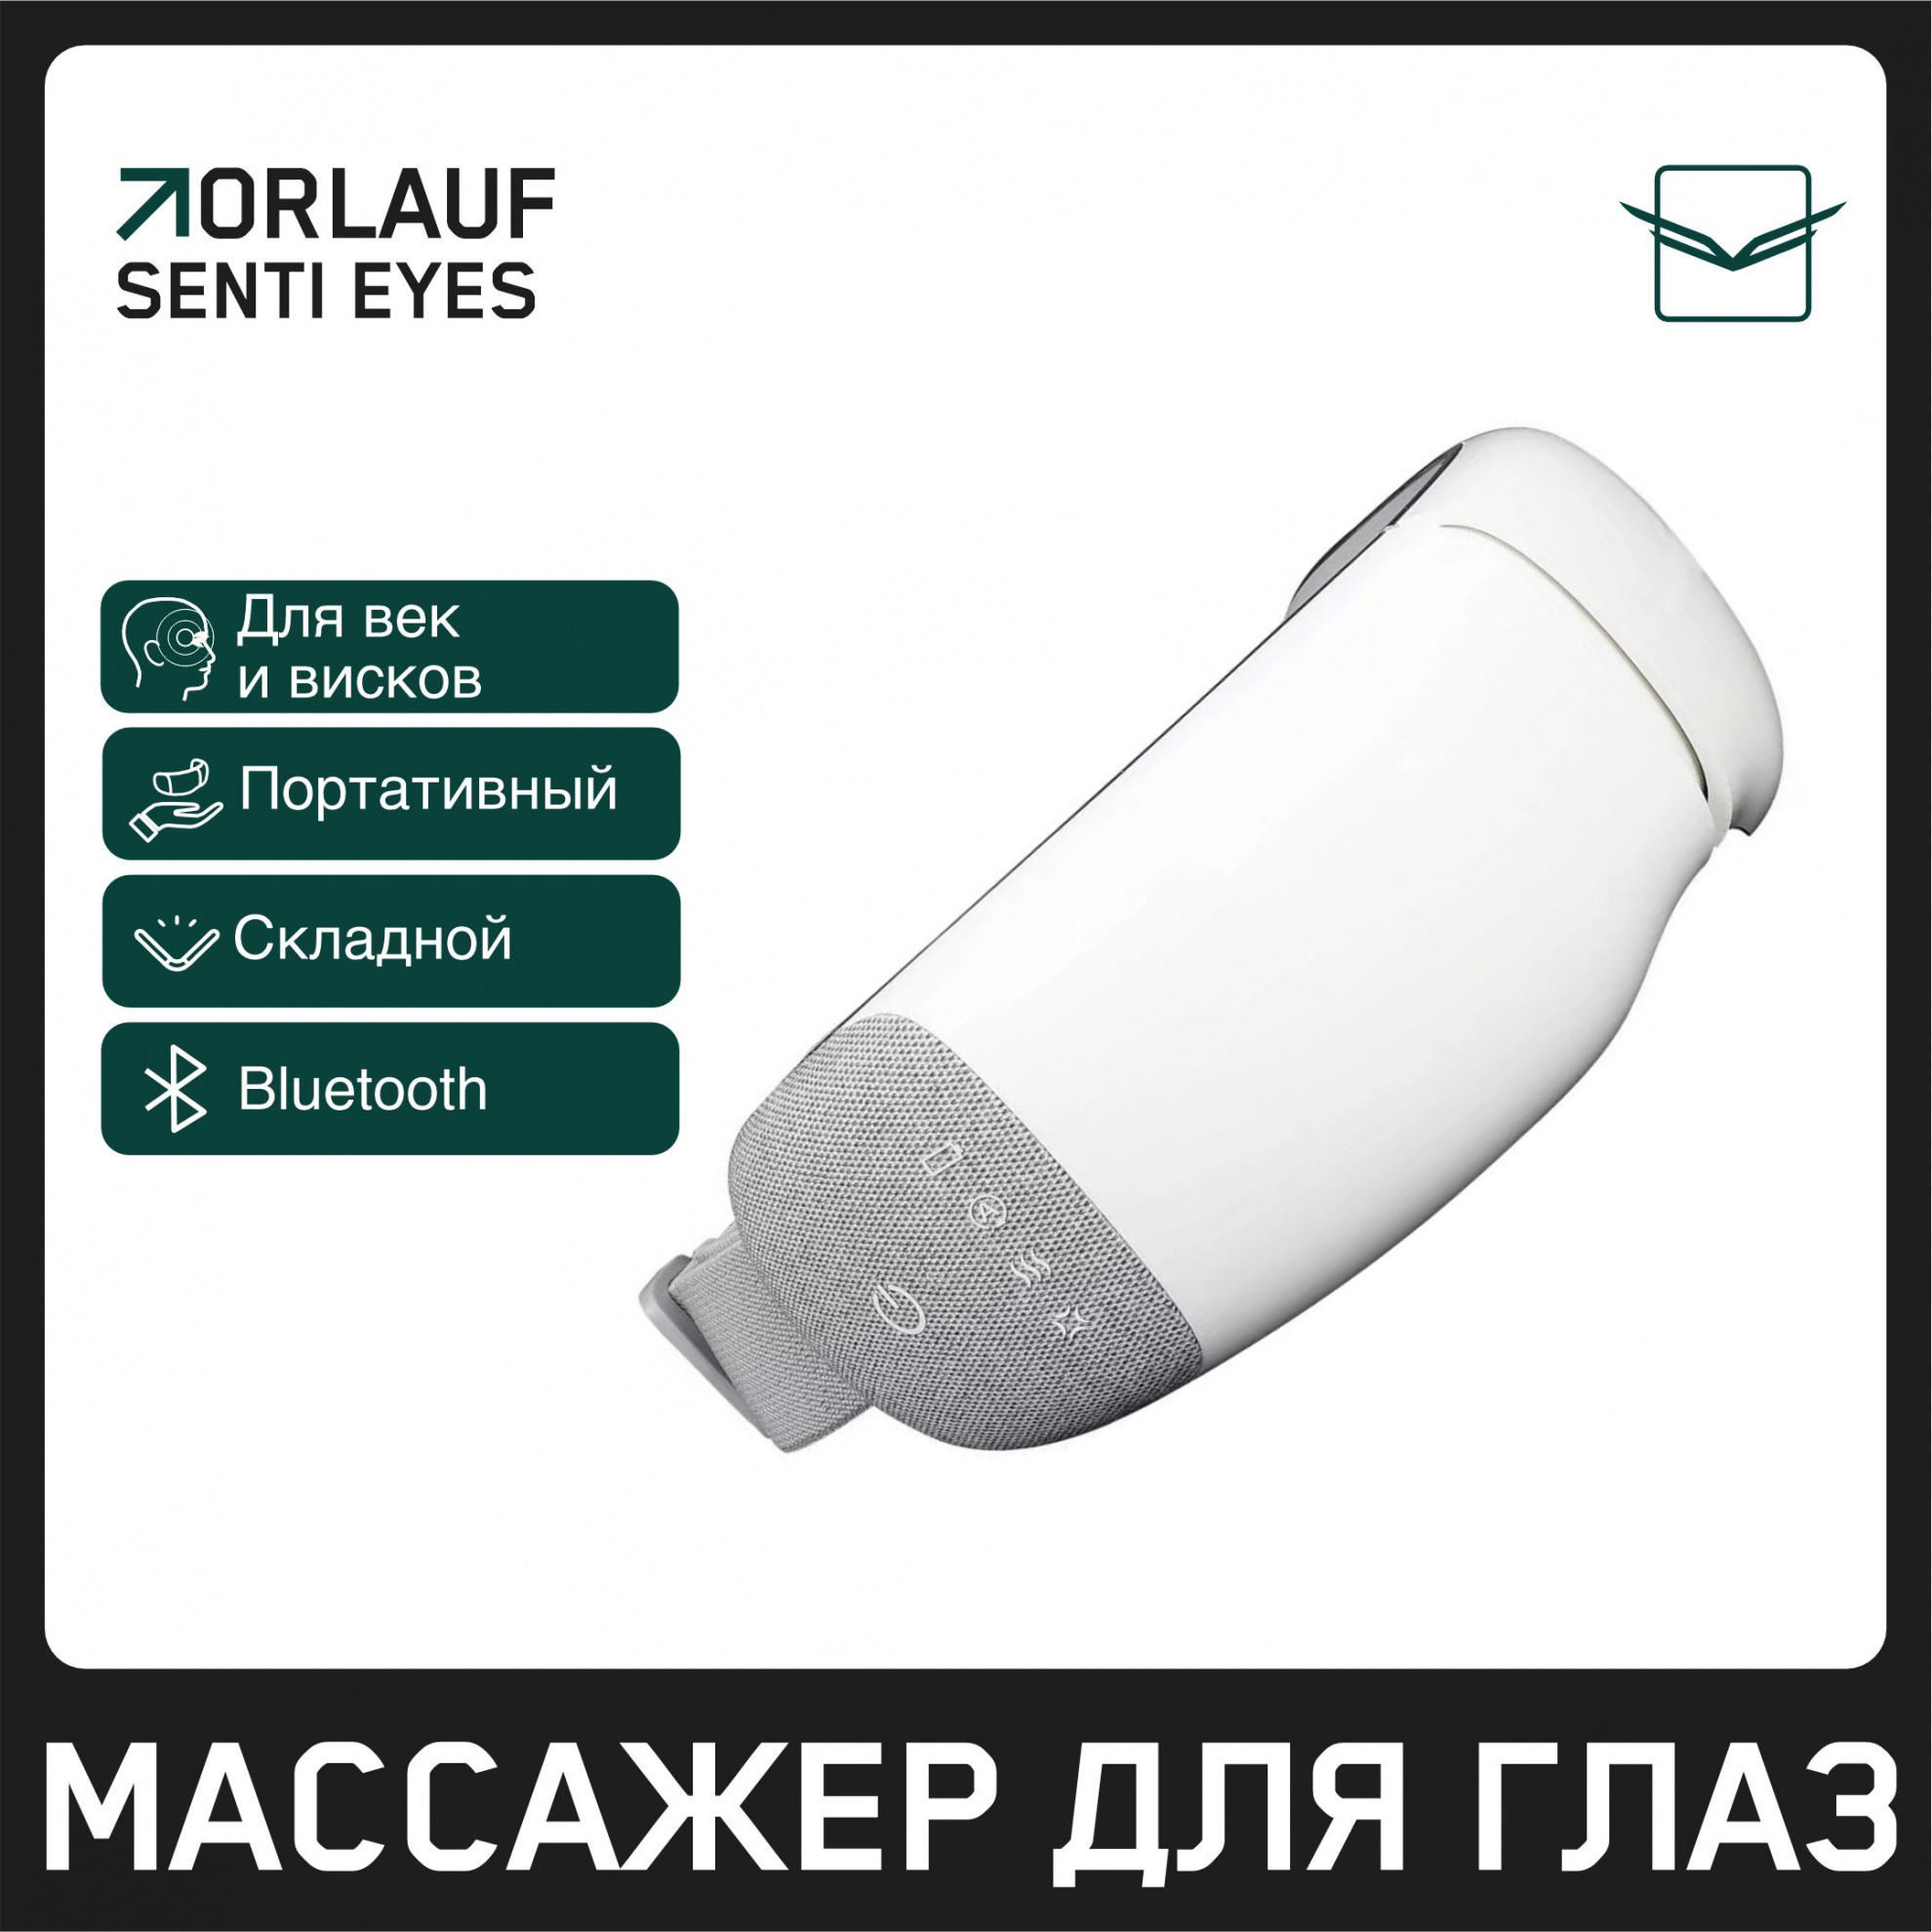 Orlauf Senti Eyes из каталога устройств для массажа в Москве по цене 9400 ₽